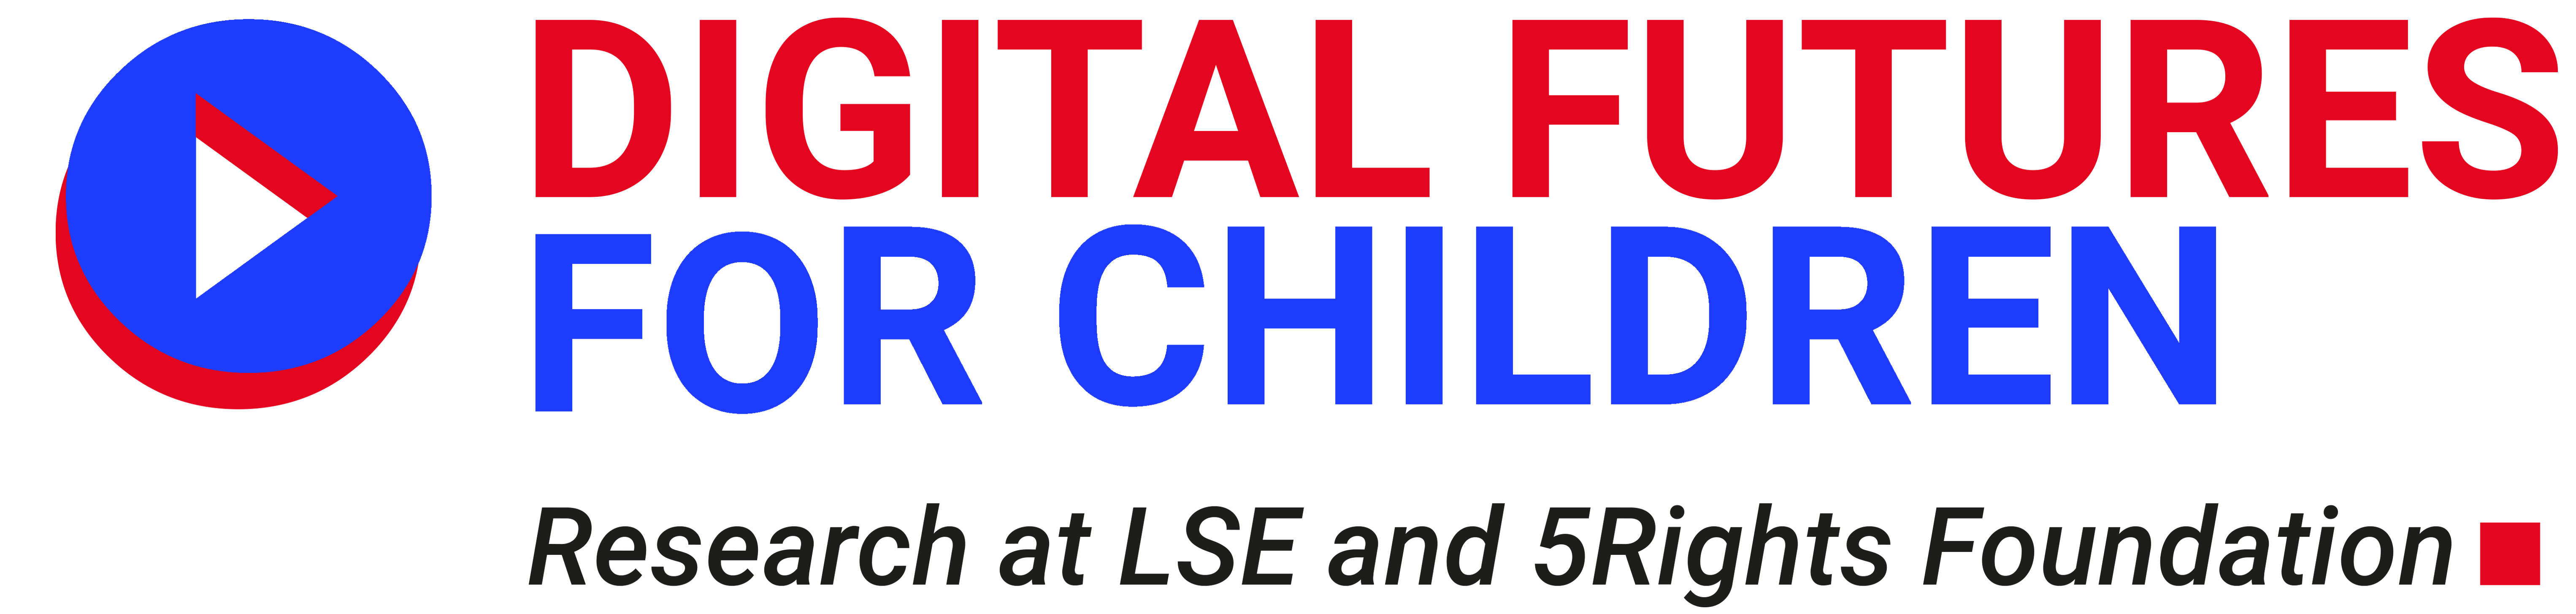 Digital_Futures_For_Children-Logo-Clear